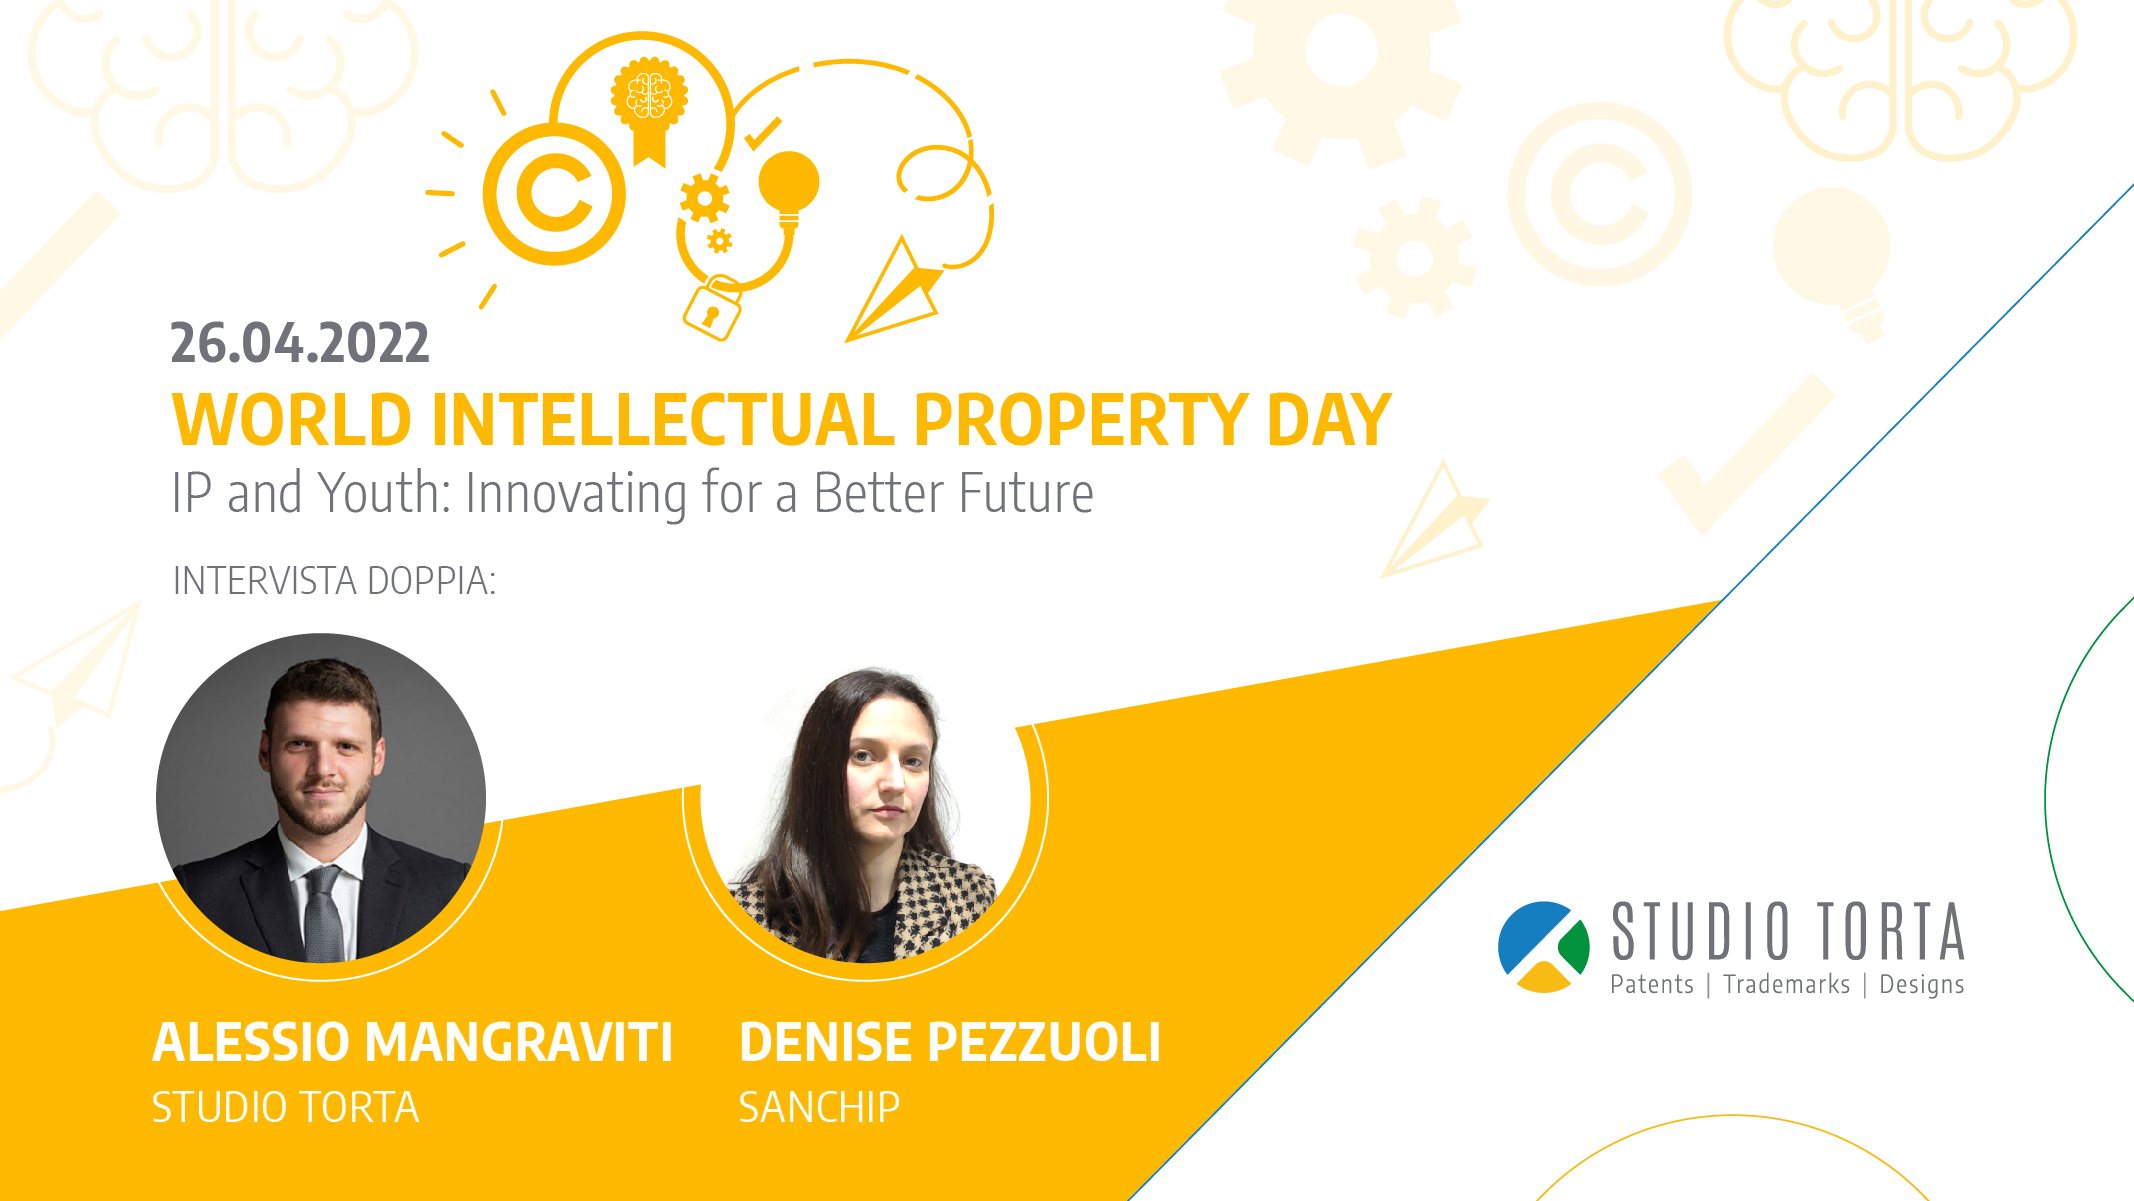 World intellectual property day